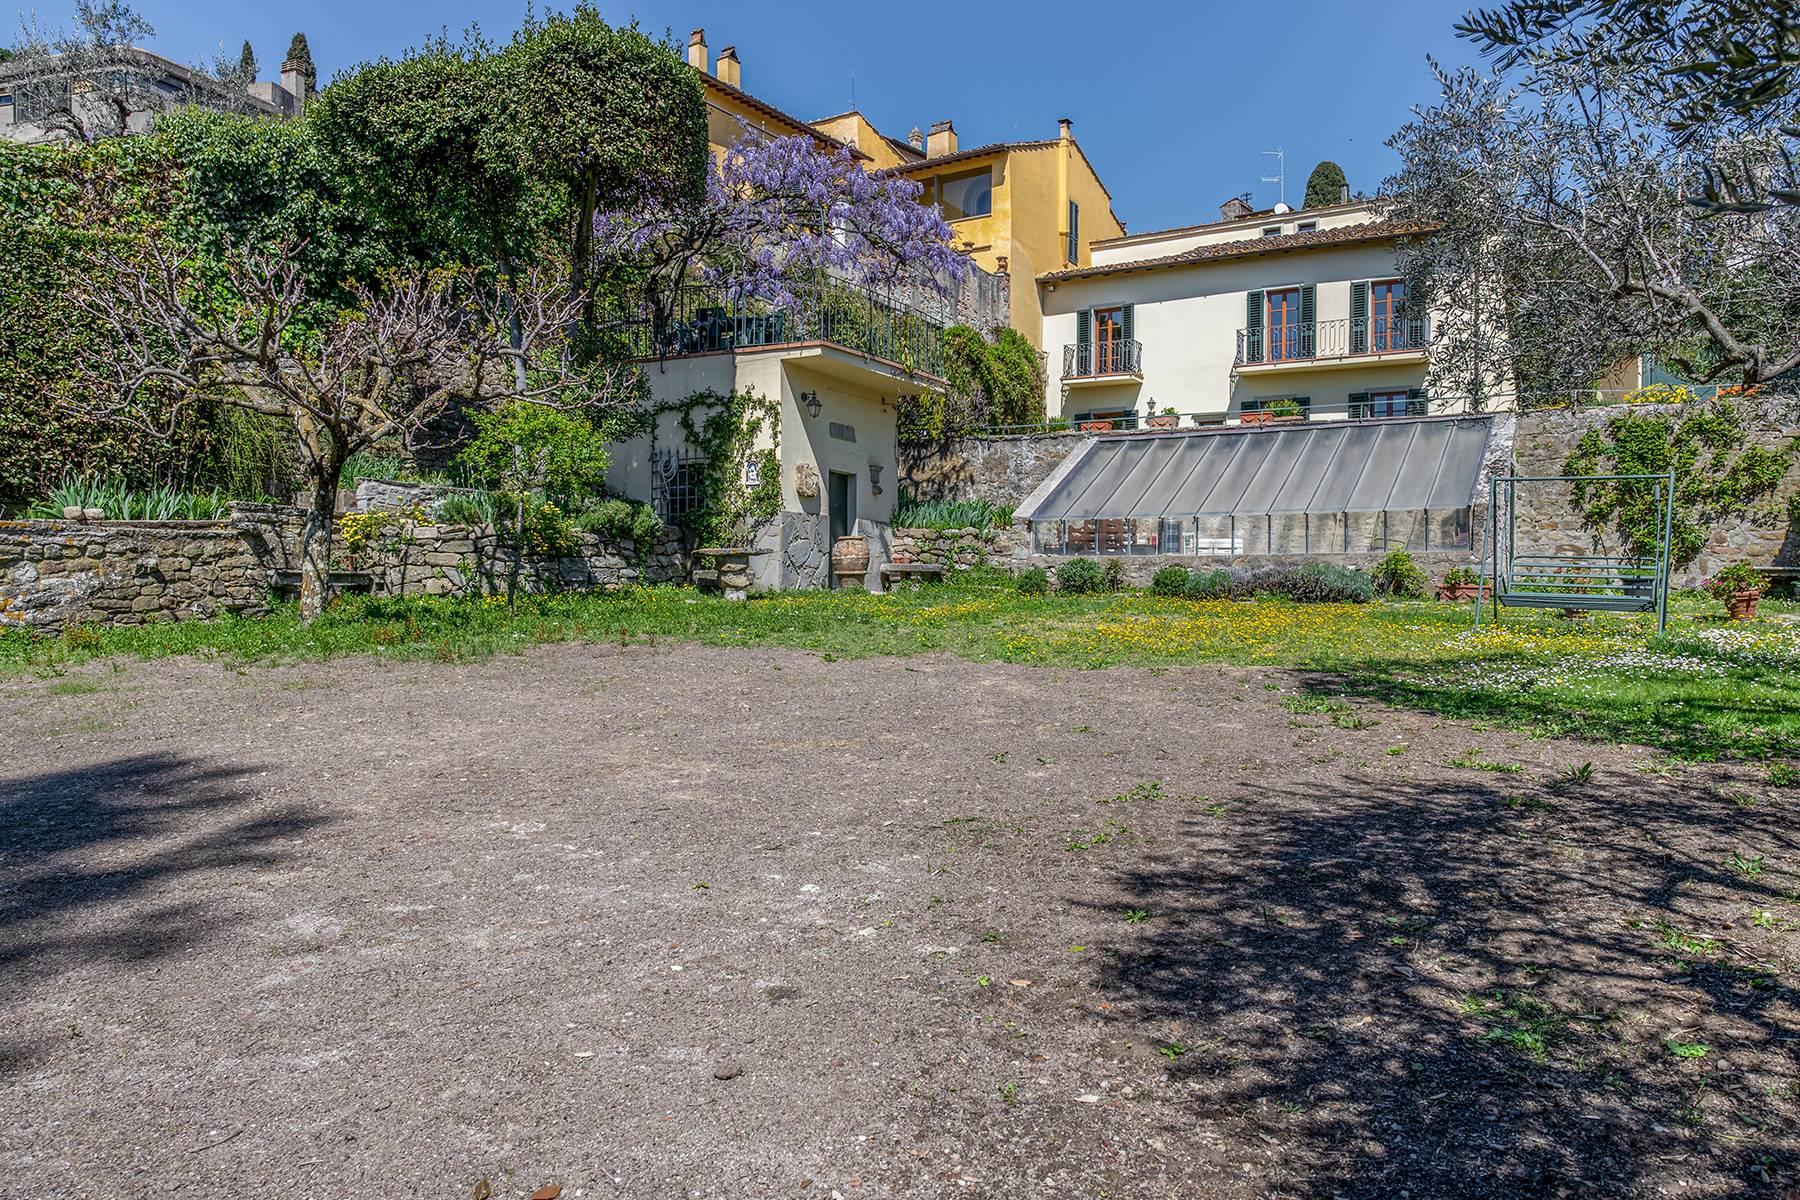 Splendida villa in posizione panoramica a Fiesole - 16